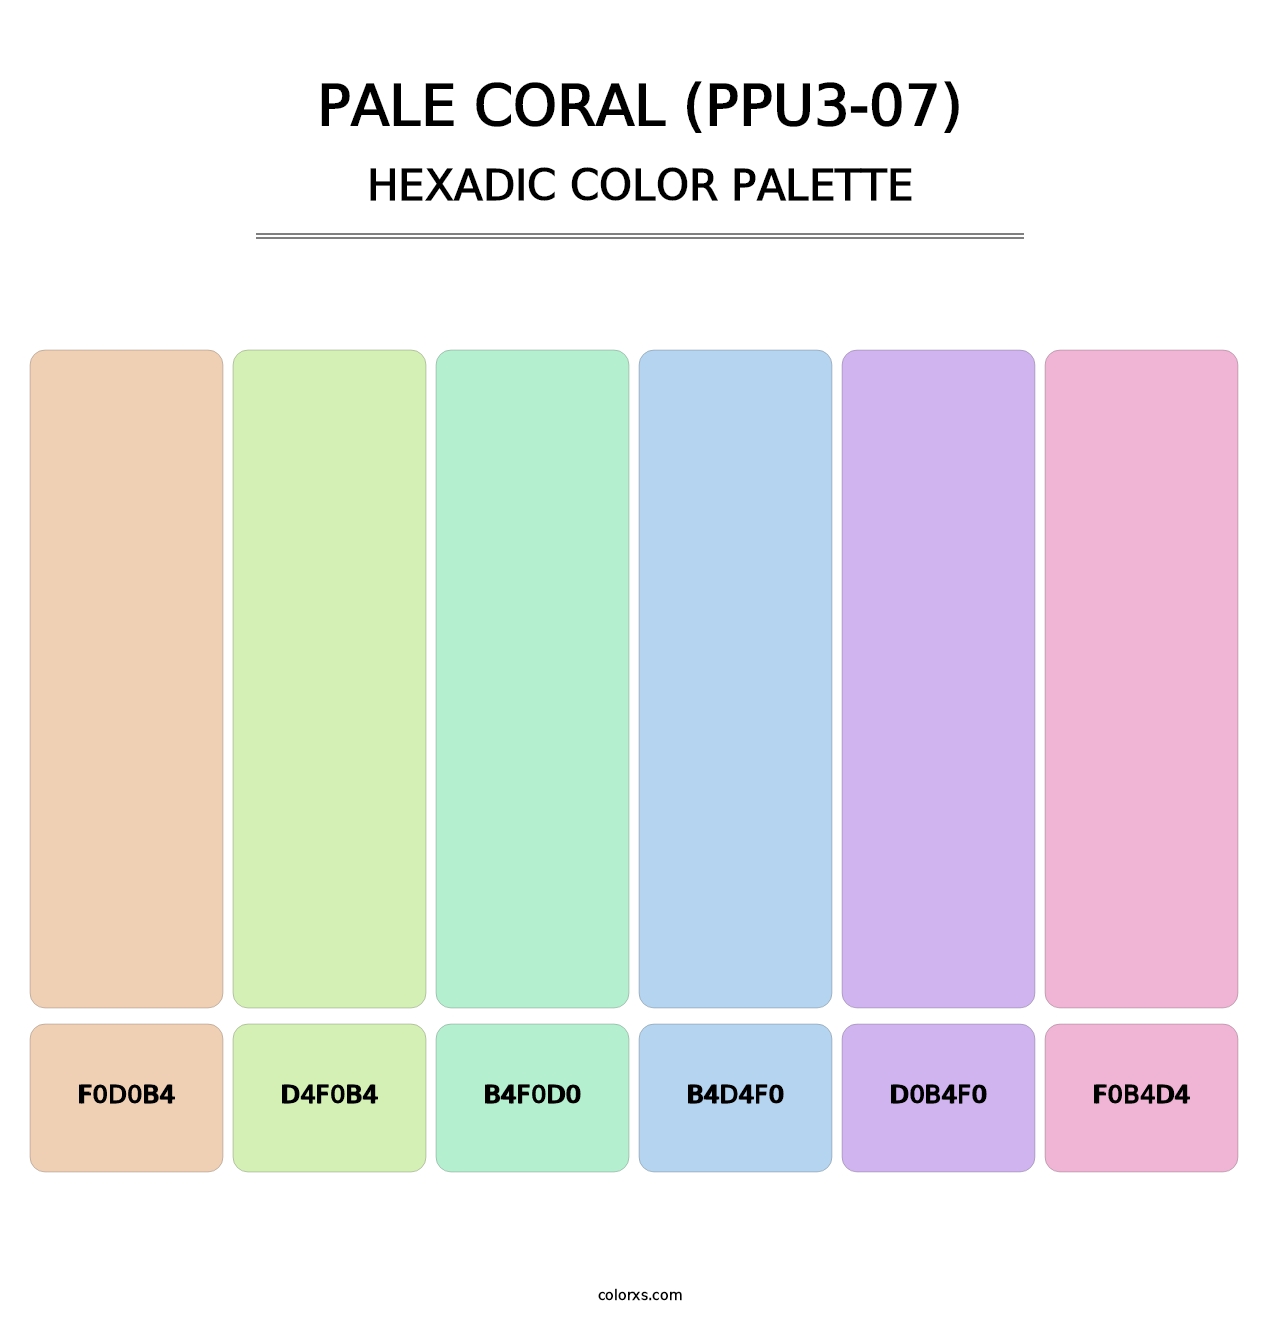 Pale Coral (PPU3-07) - Hexadic Color Palette